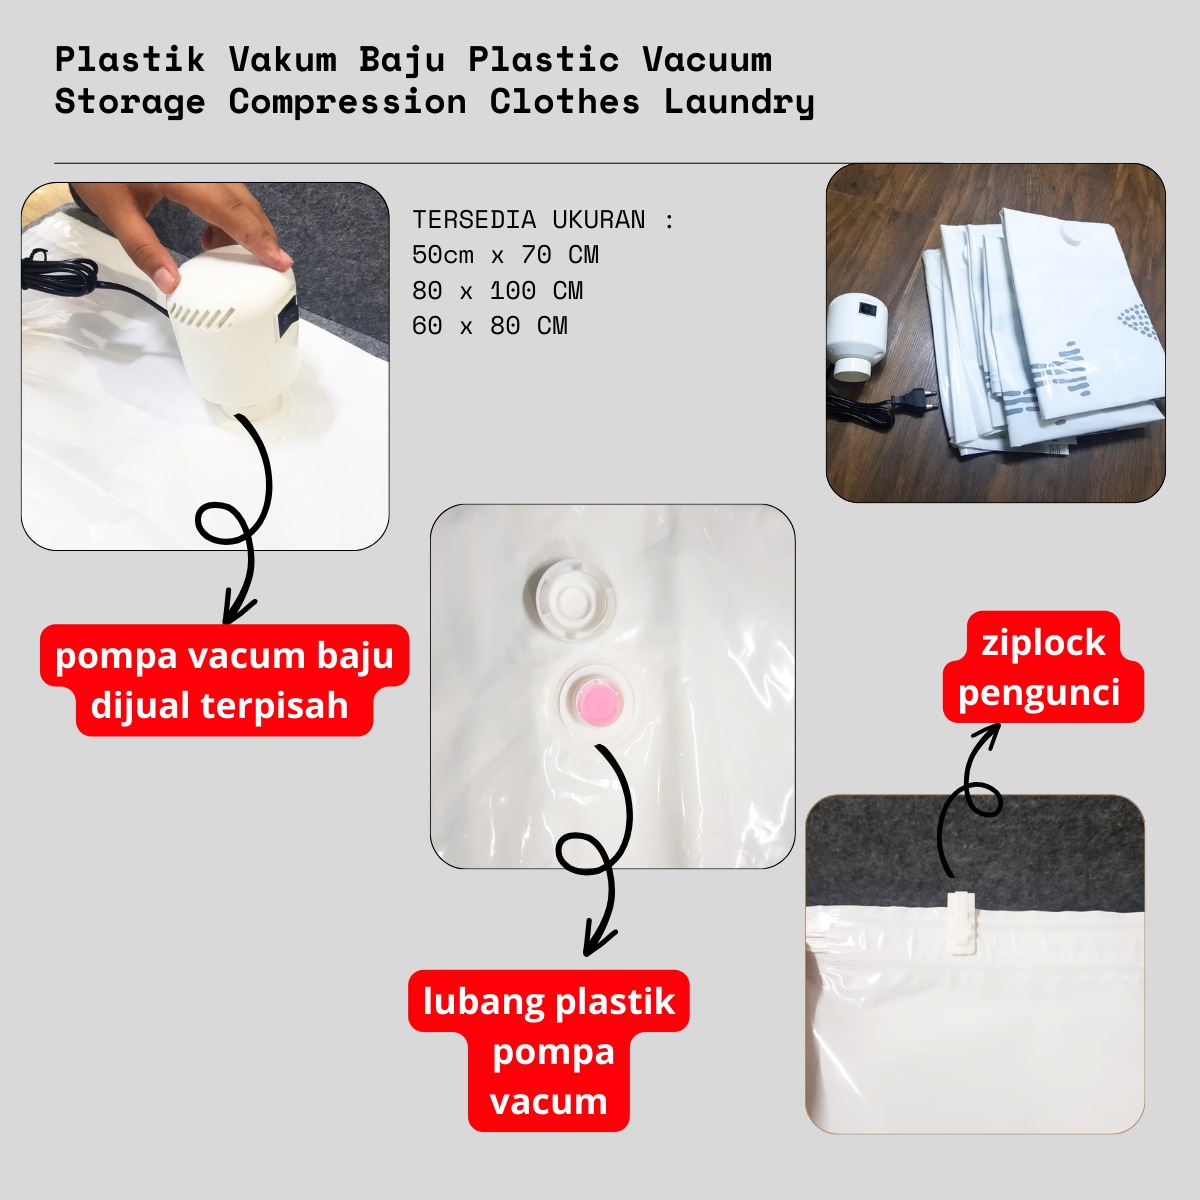 SOHA VB-06 60 x 80 CM Plastik Vakum Baju Plastic Vacuum Storage Compression Clothes Laundry Travel Bag Kompresi Simpan Seprei Selimut Pakaian